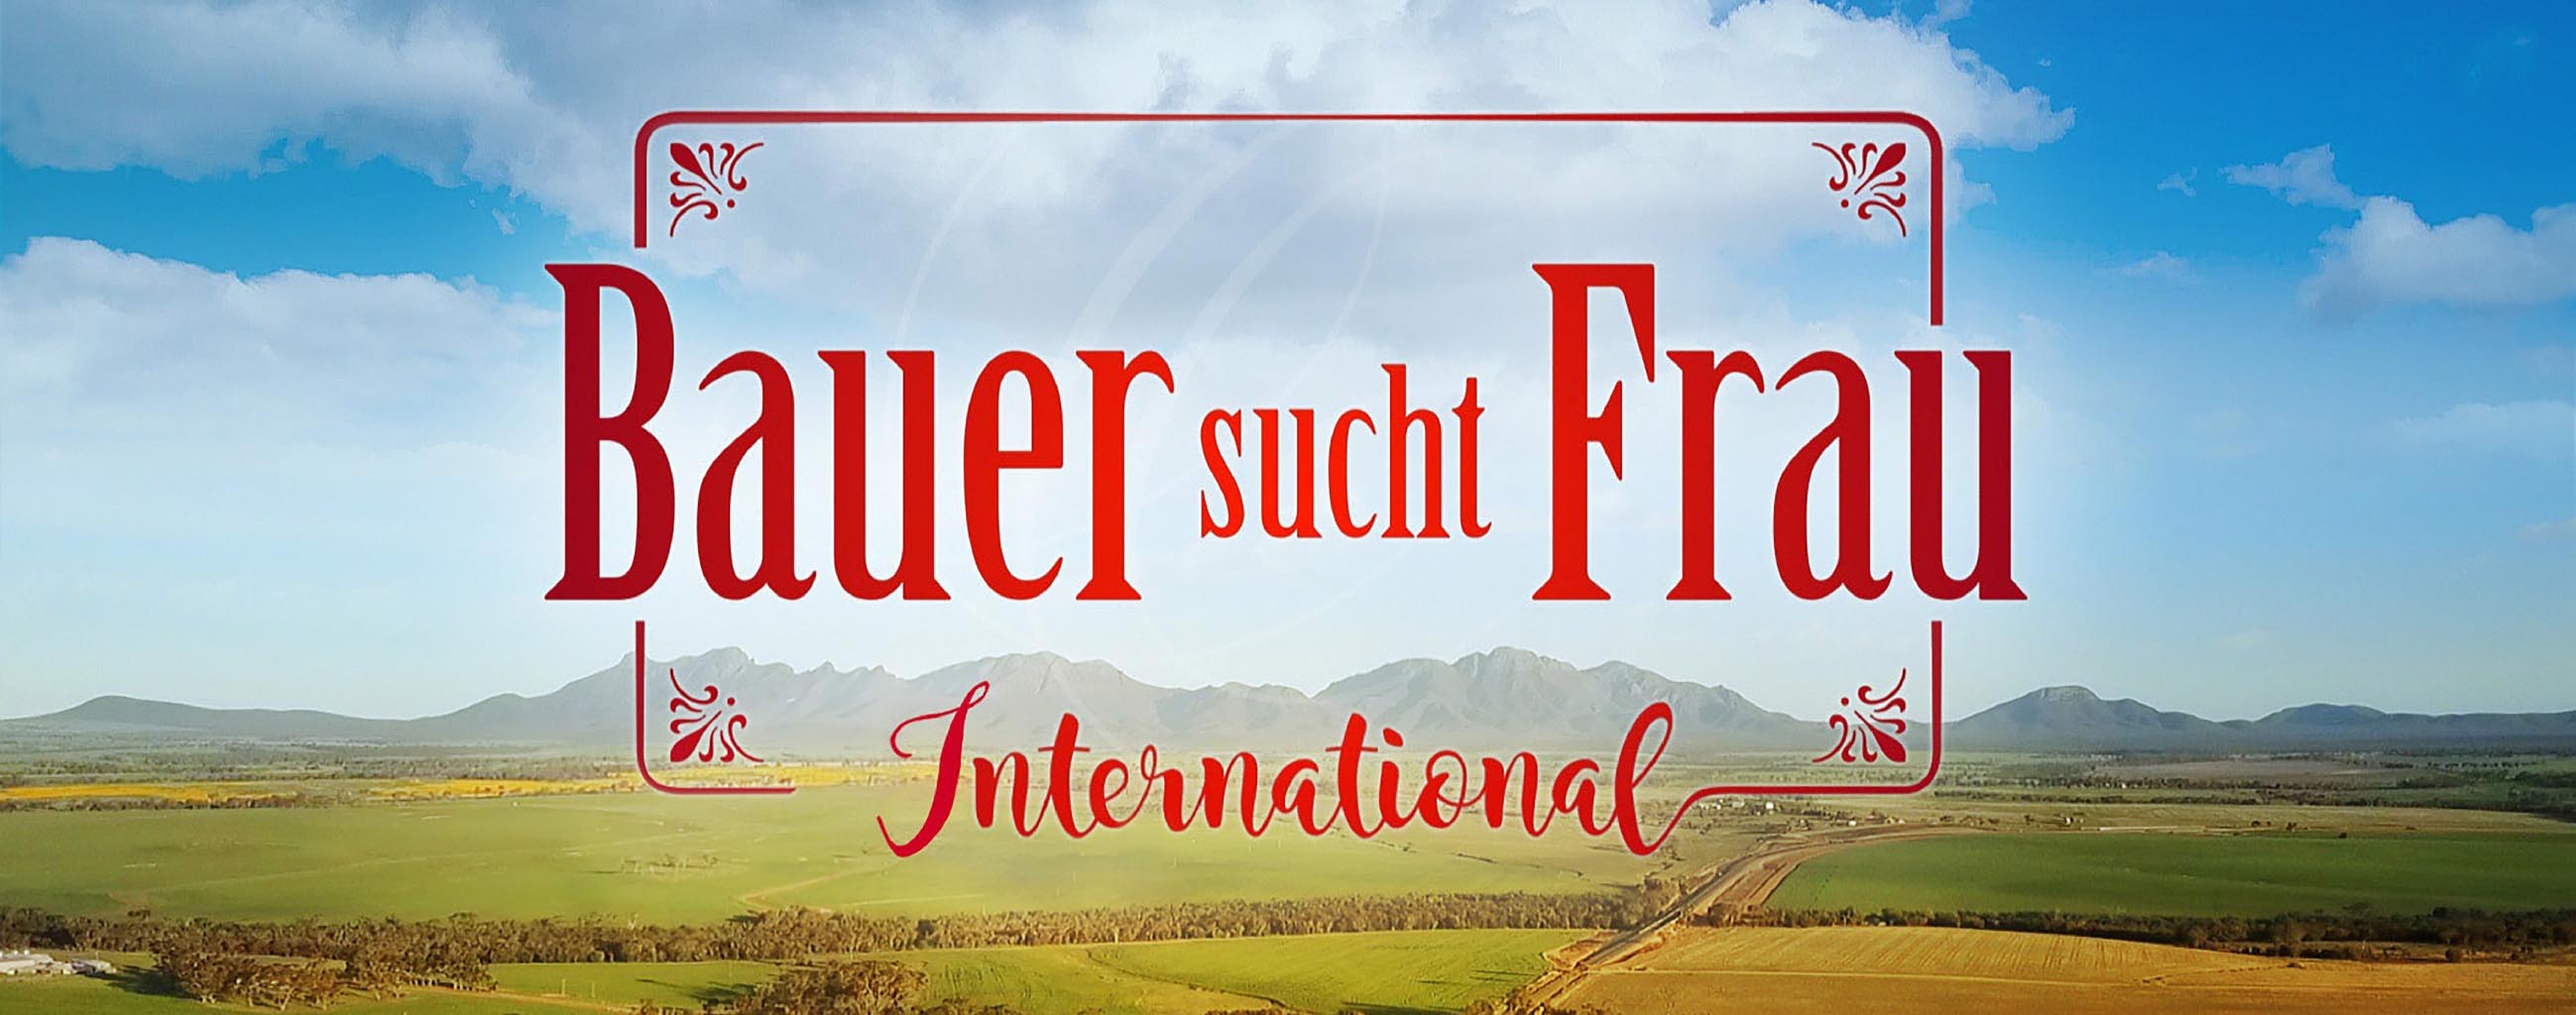 Bauer sucht Frau International